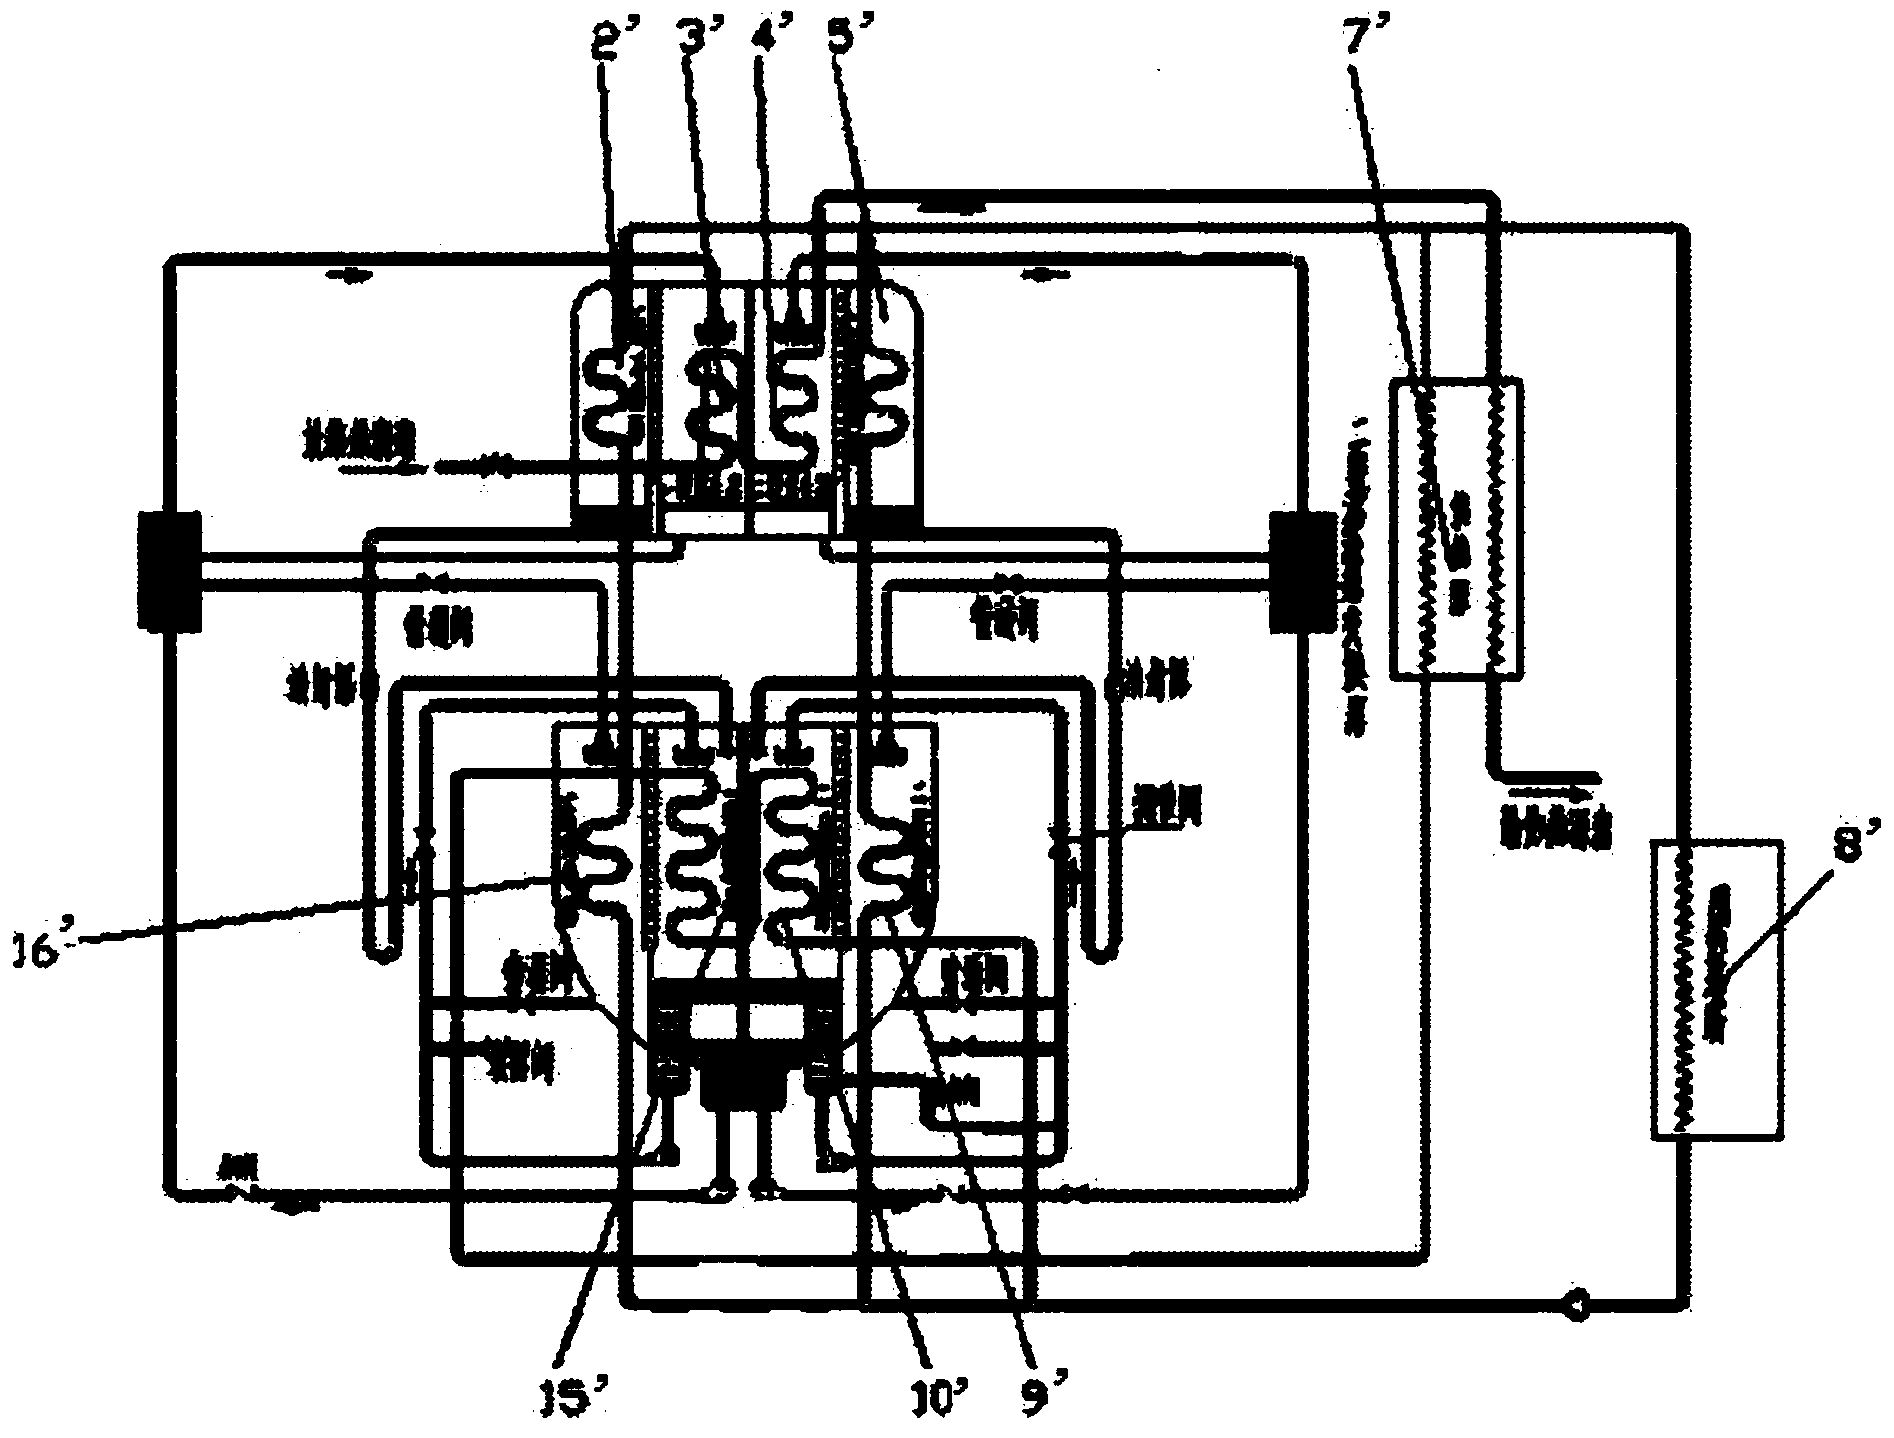 Absorptive heat exchanger unit